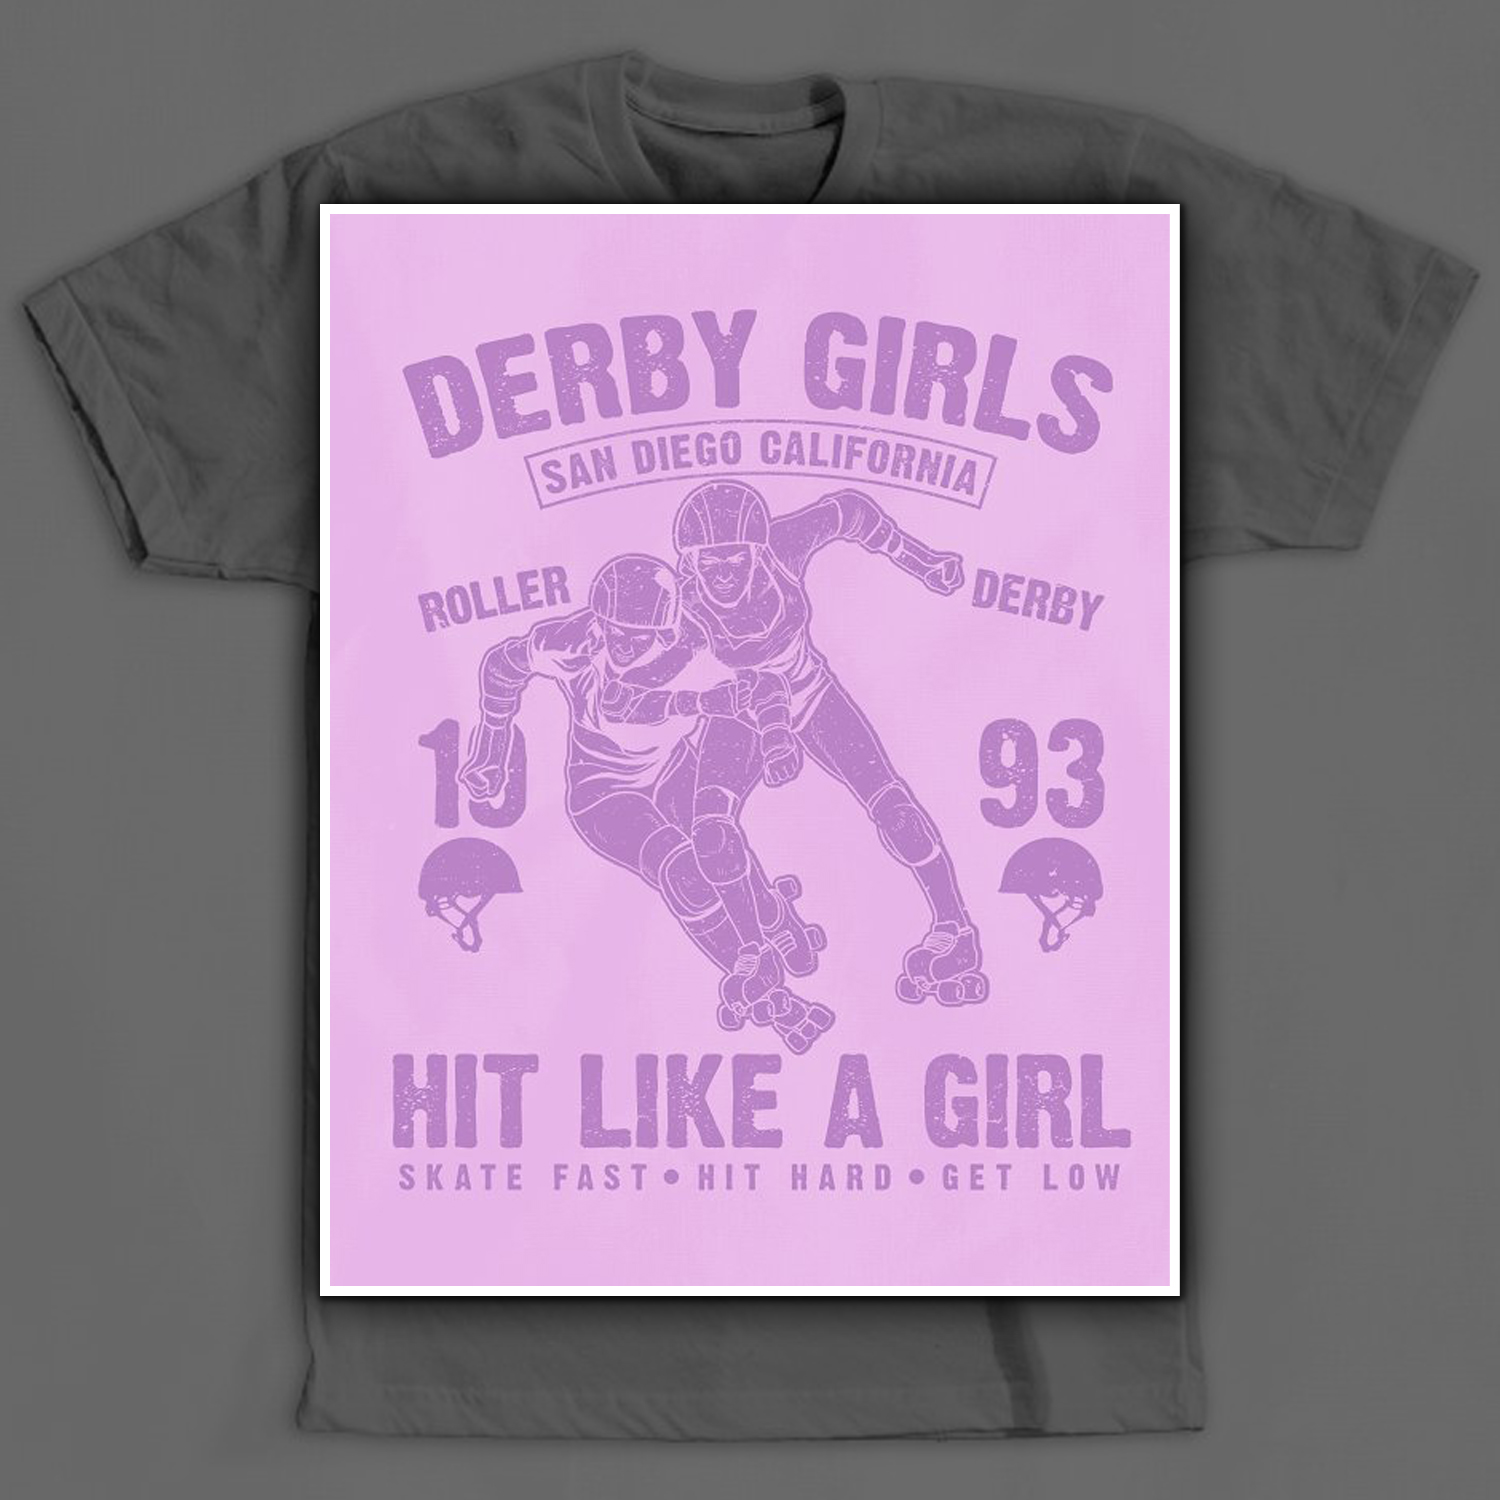 Preview roller derby girls t shirt design.